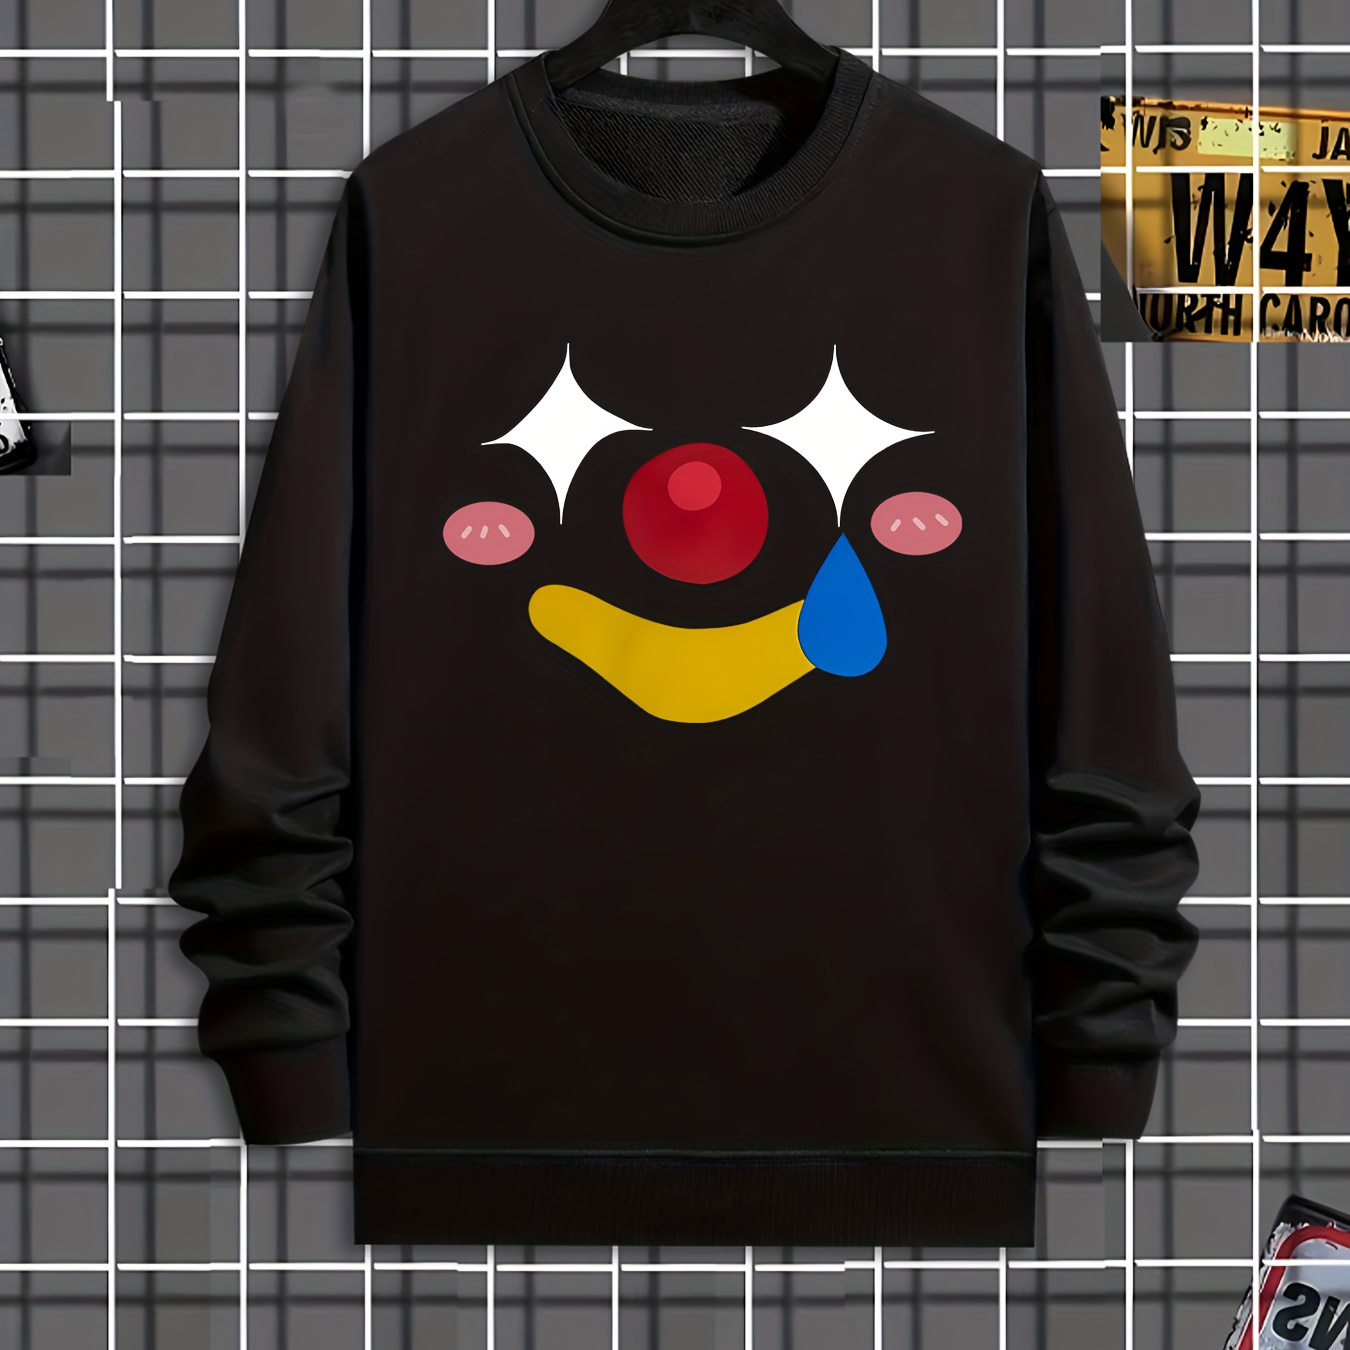 

Clown Face Print Trendy Sweatshirt, Men's Casual Graphic Design Crew Neck Pullover Sweatshirt For Men Fall Winter